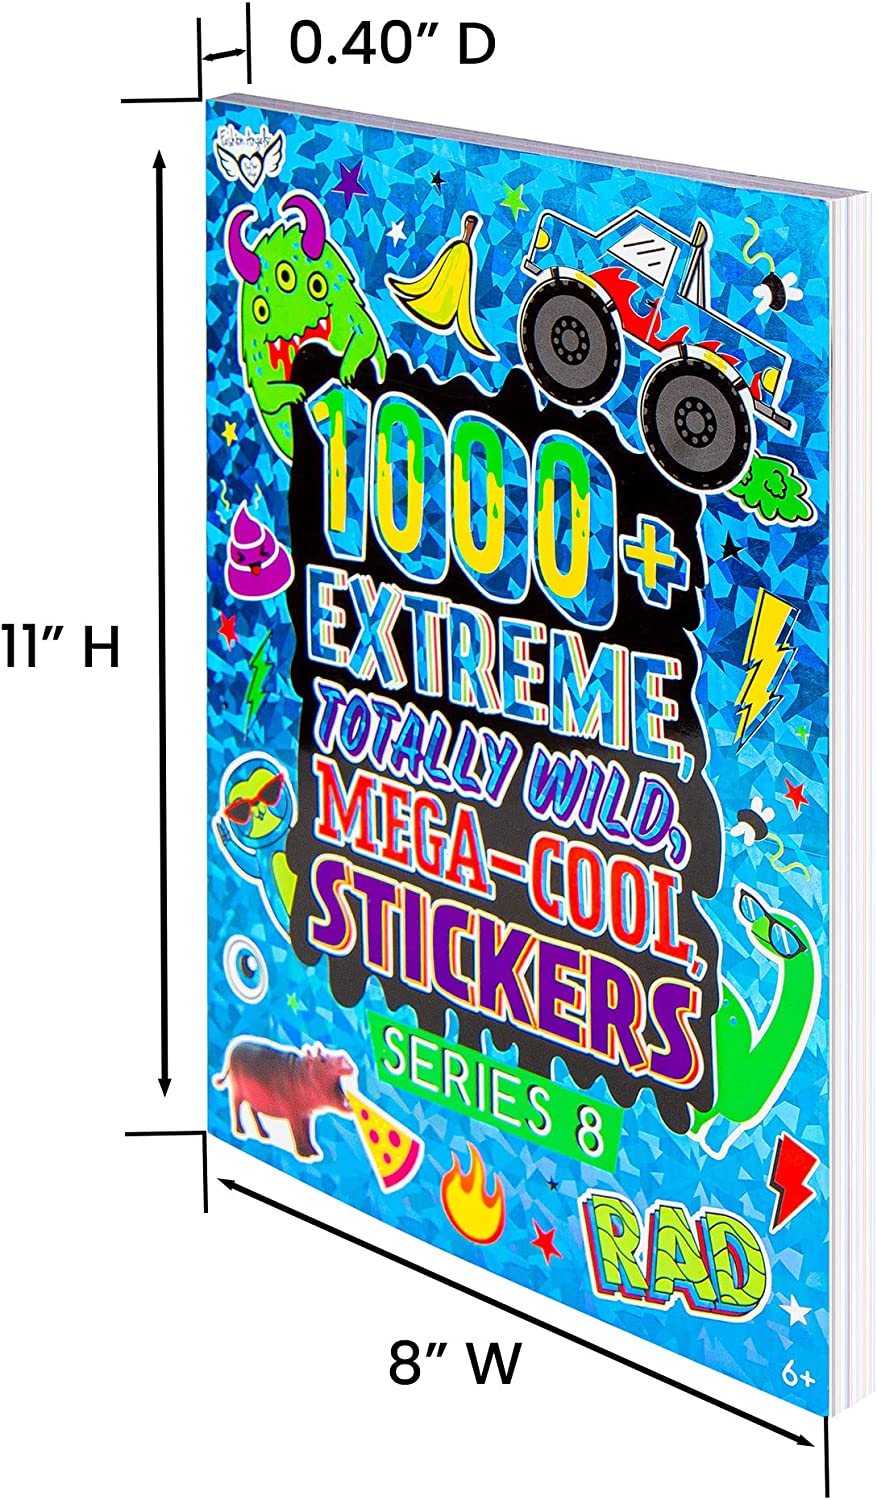 Fashion Angels 1000+ Mega Cool Stickers - Series 8